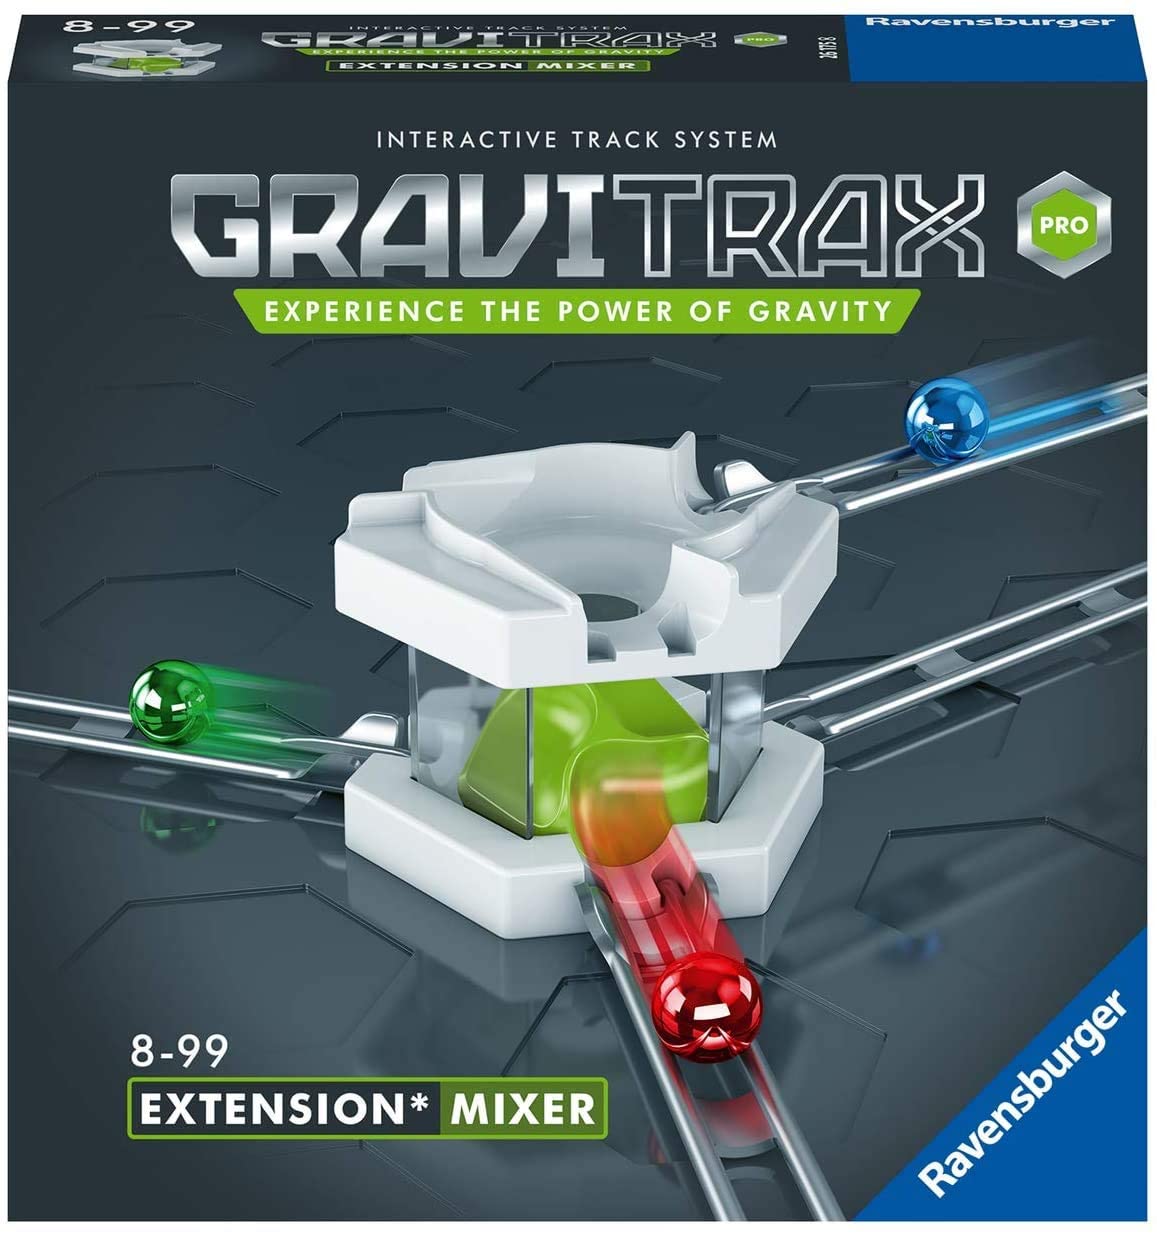 Gravitrax PRO Mixer Extension